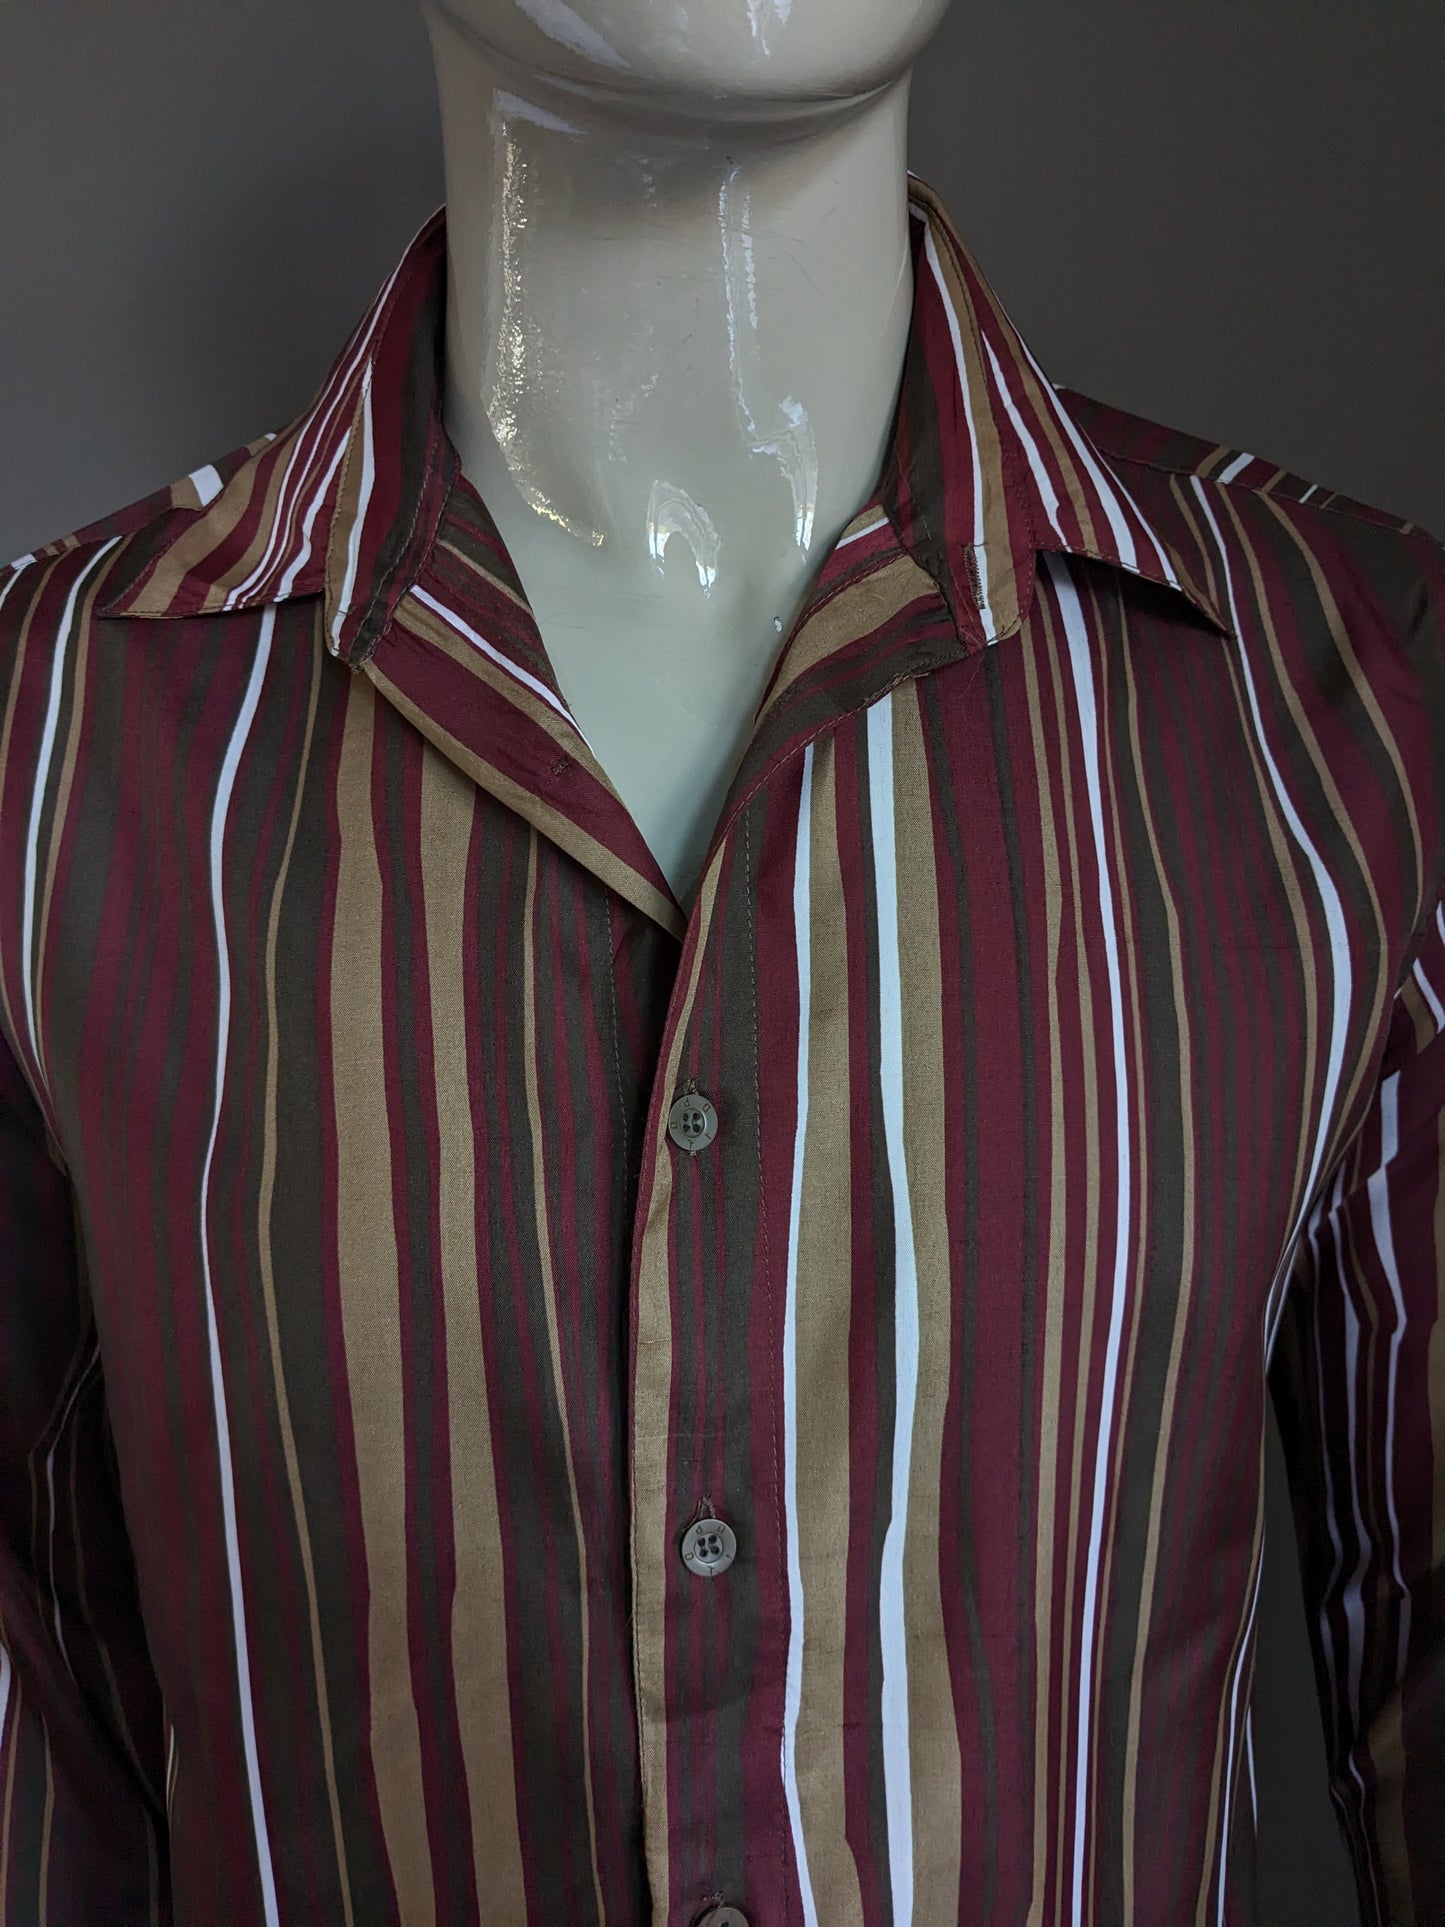 Vintage 98/86 overhemd. Rood Bruin Groen gestreept. Maat M.